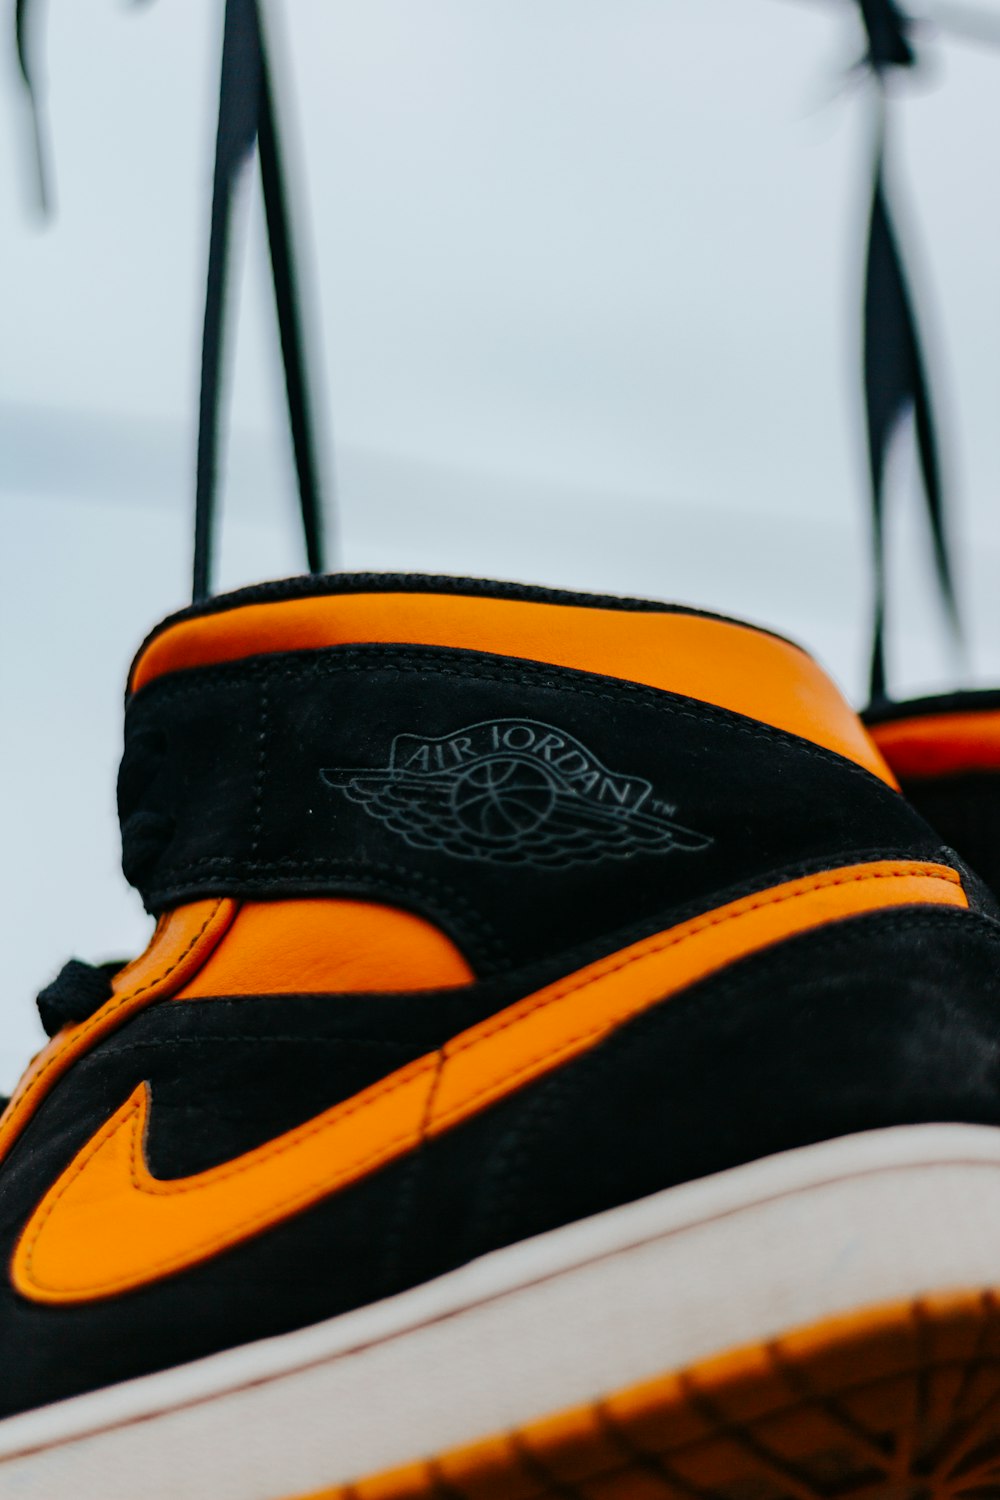 acelerador Decepcionado raya black orange and white nike high top sneakers photo – Free Footwear Image  on Unsplash